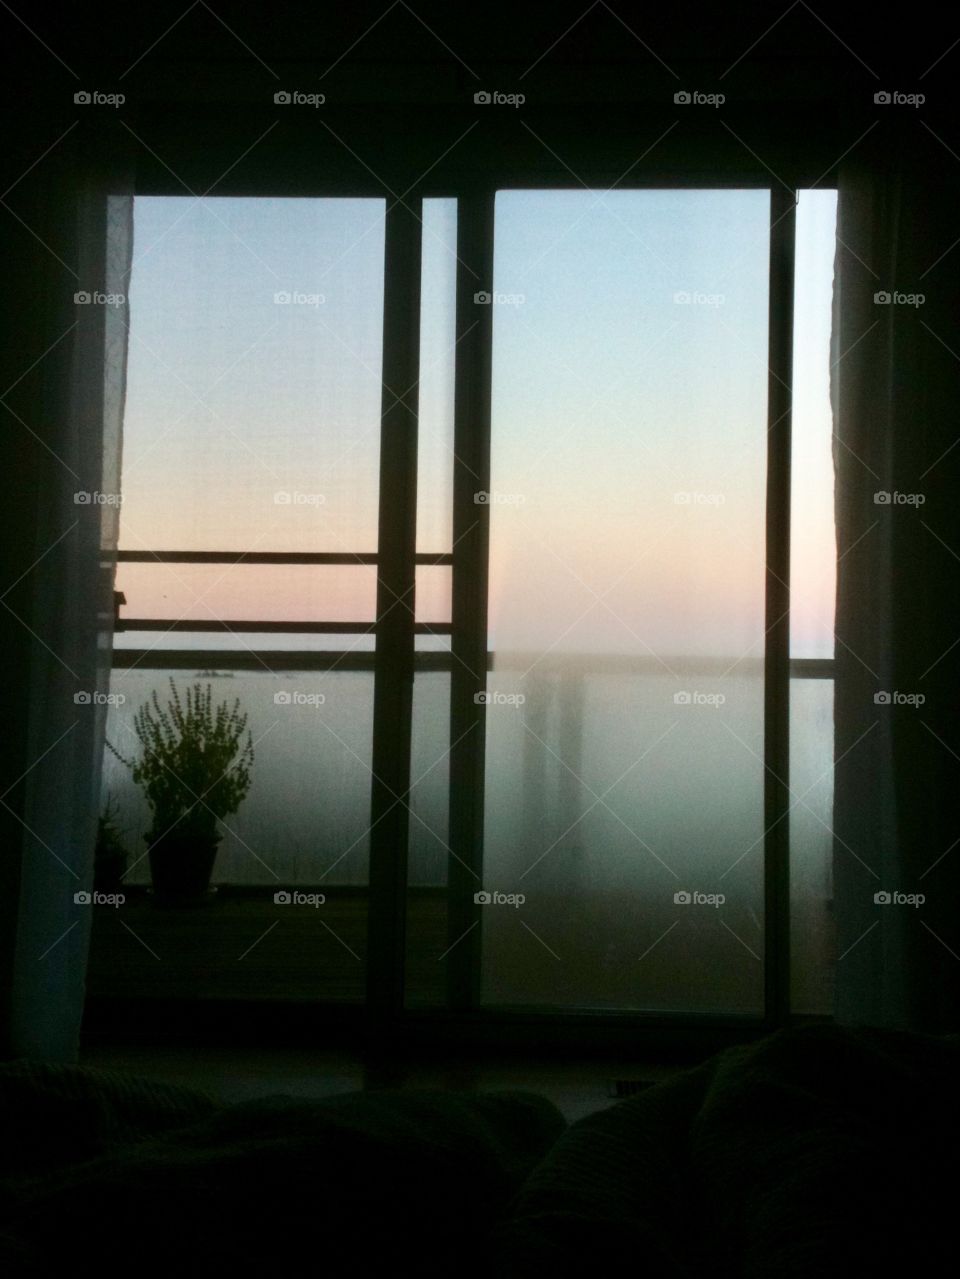 Waking up to a hazy morning. 